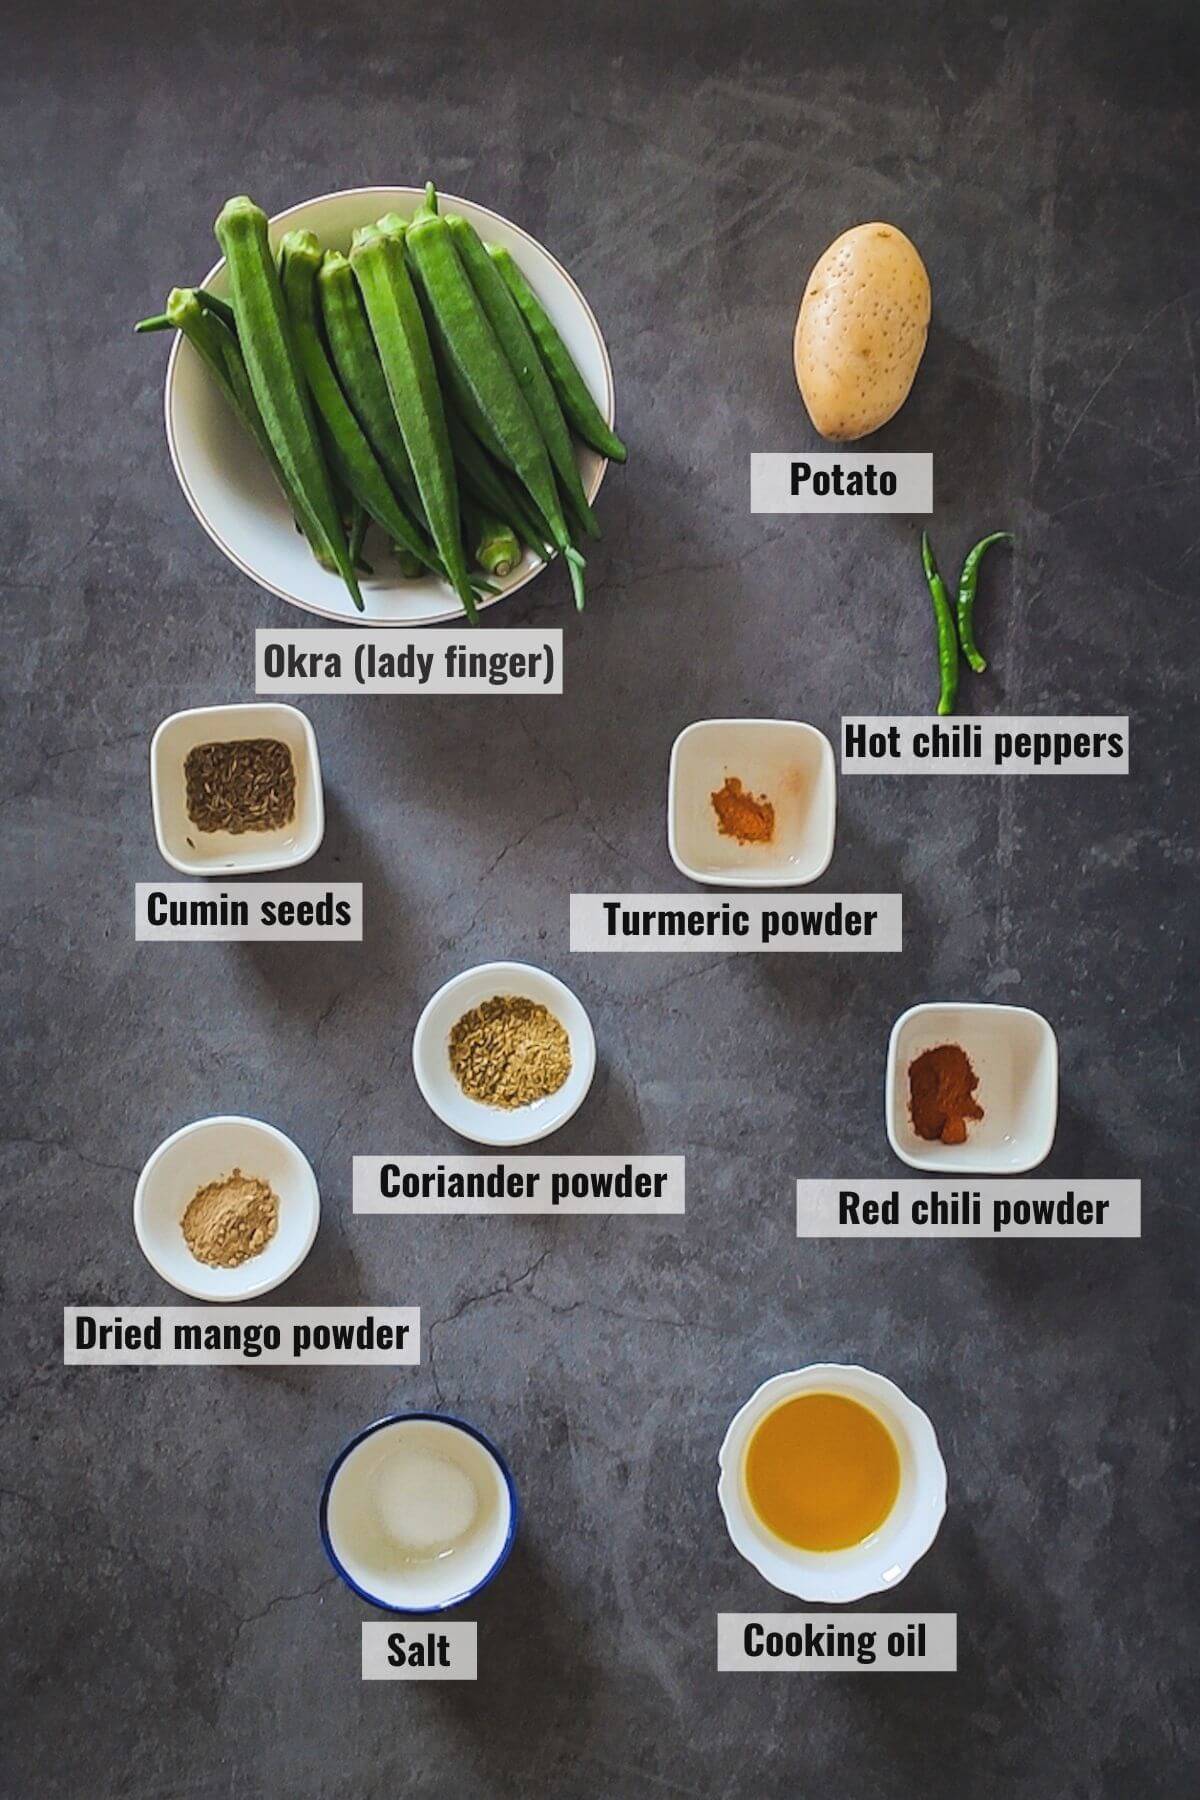 Ingredients for aloo bhindi masala labelled